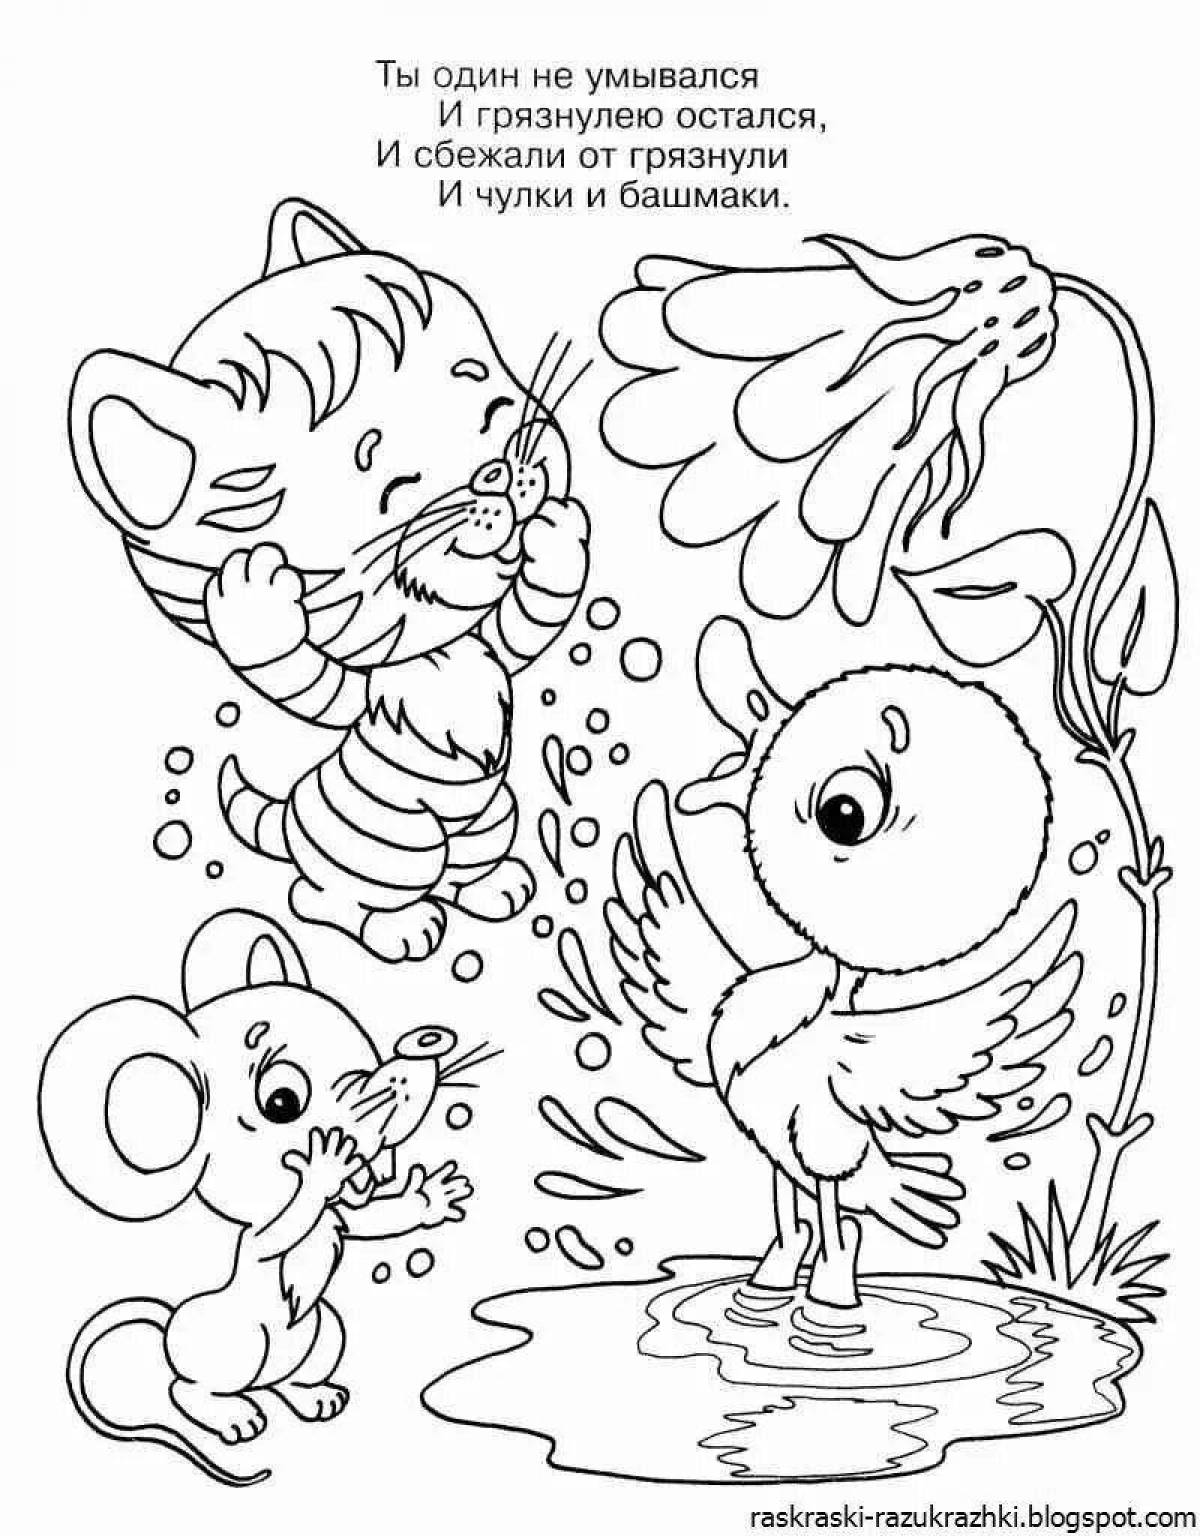 Chukovsky's humorous tale coloring book